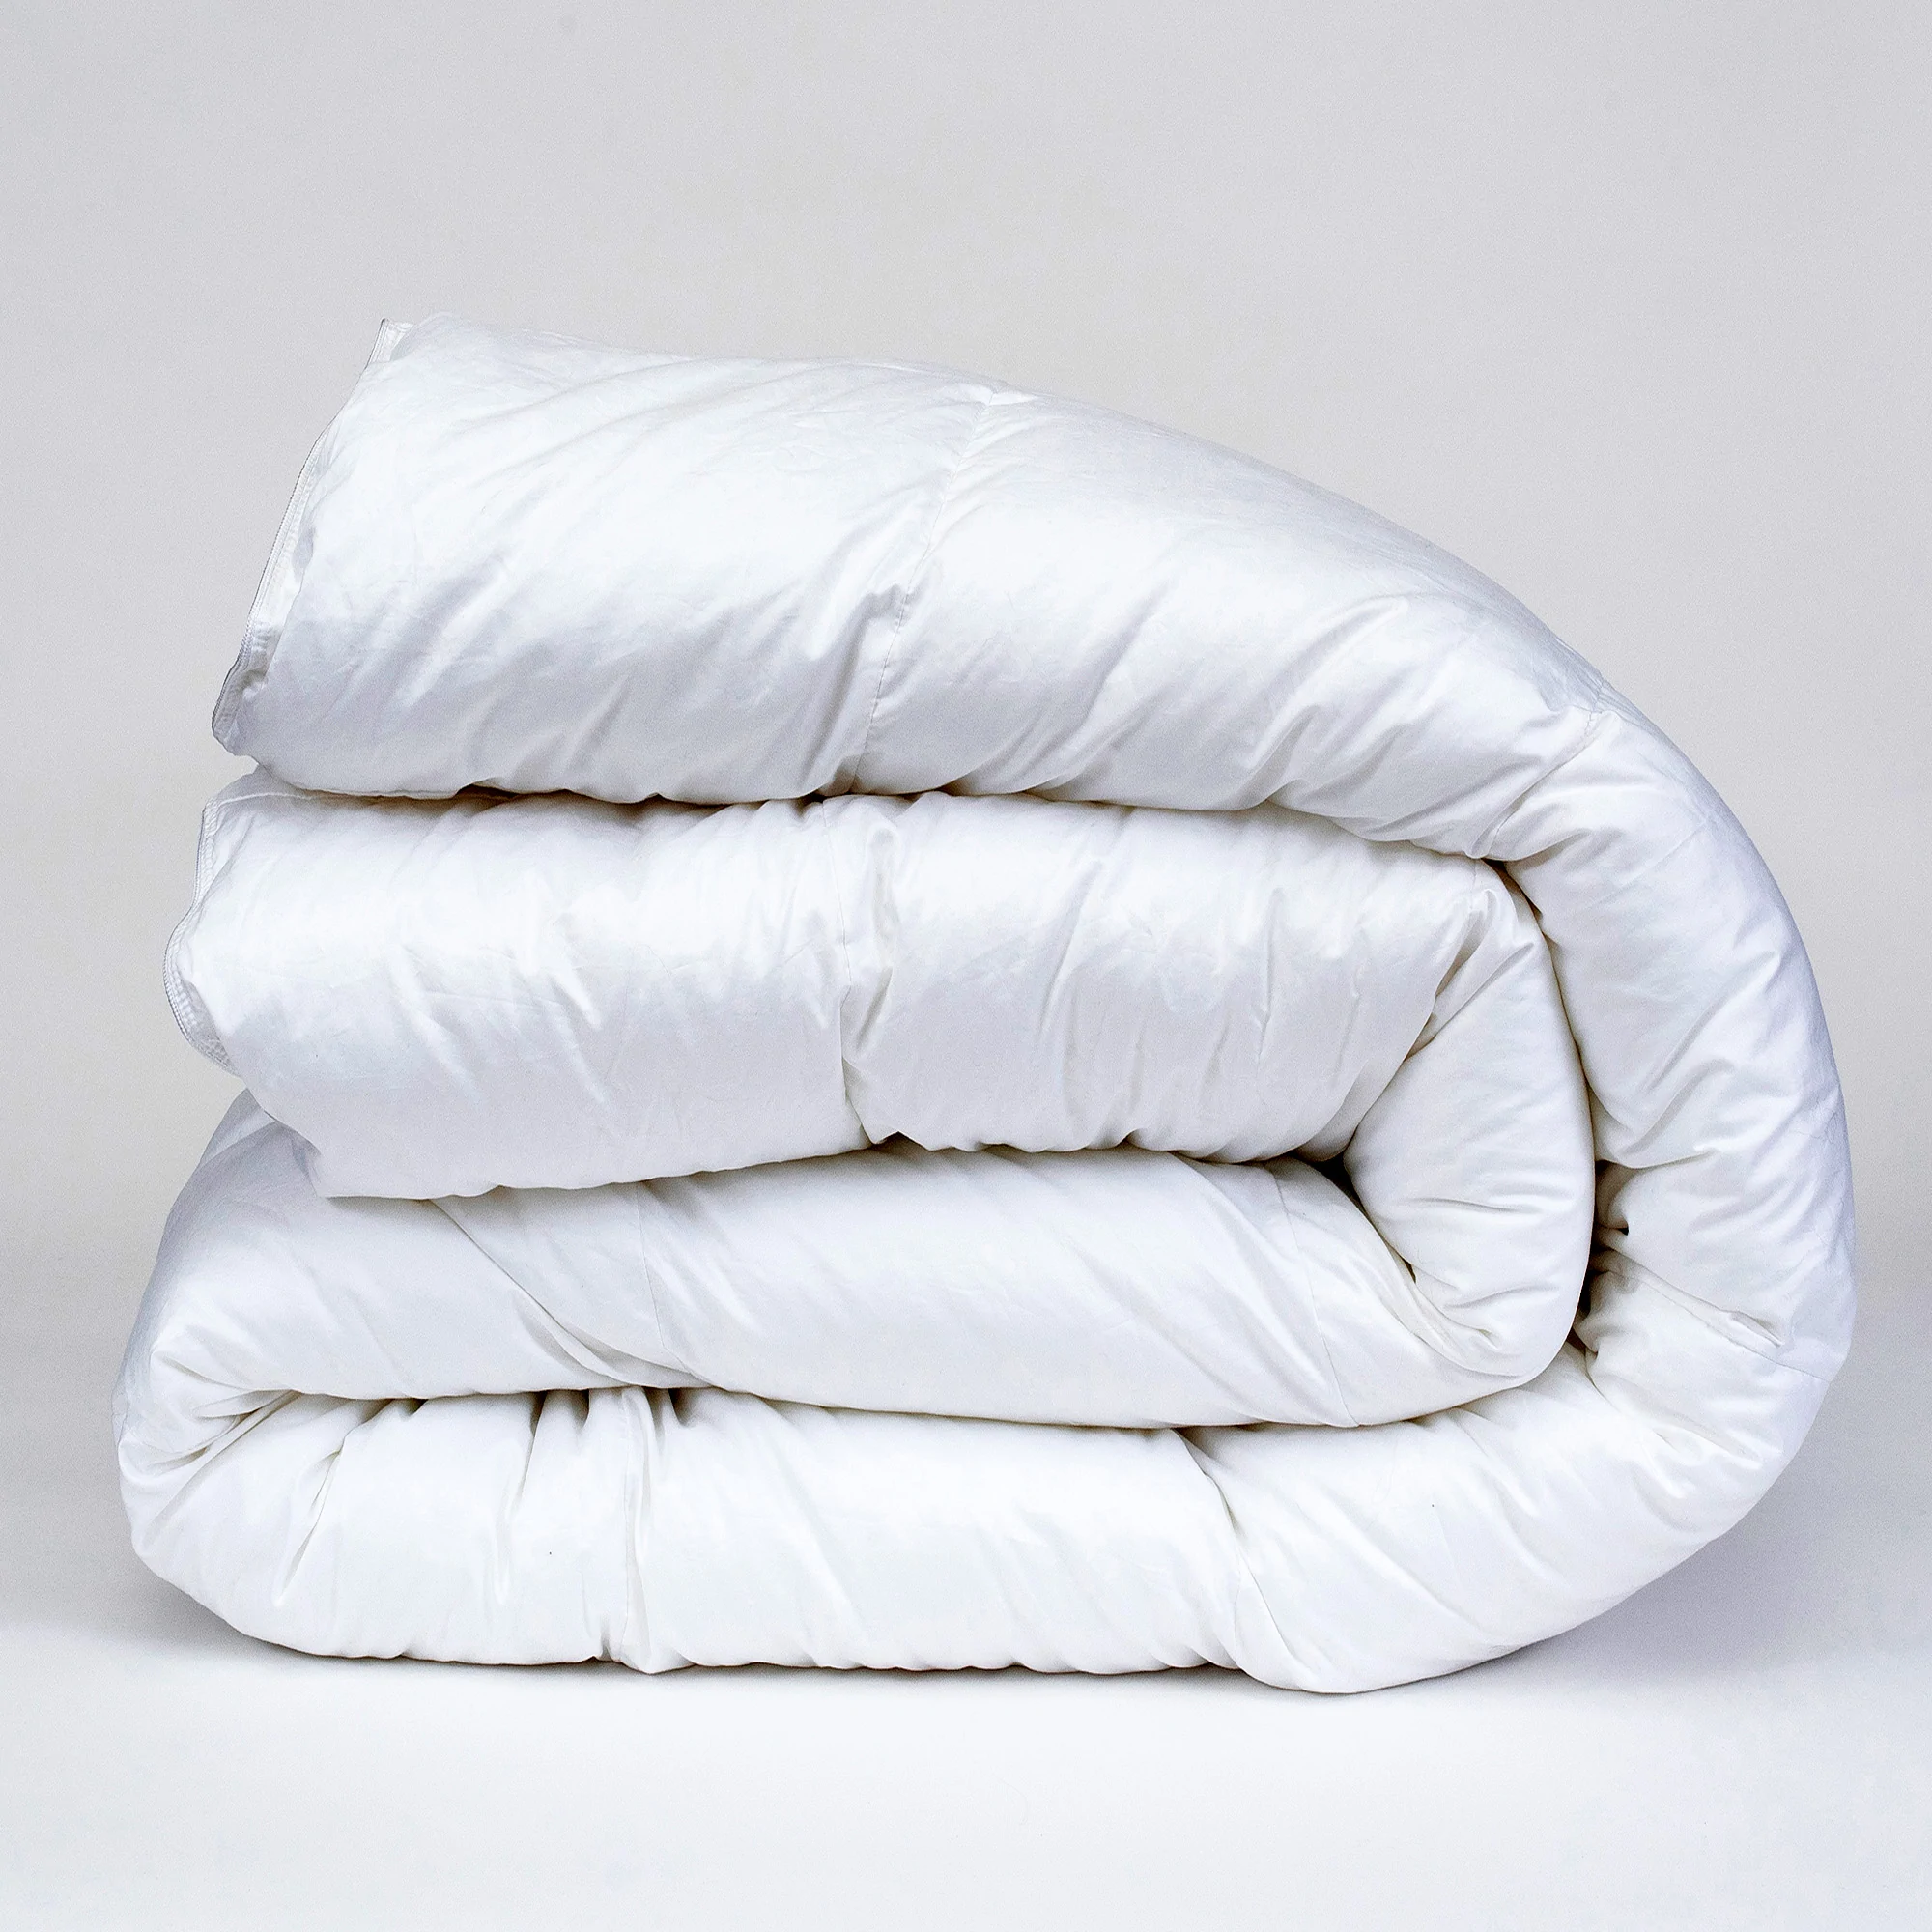 American Blanket Company Down Comforter